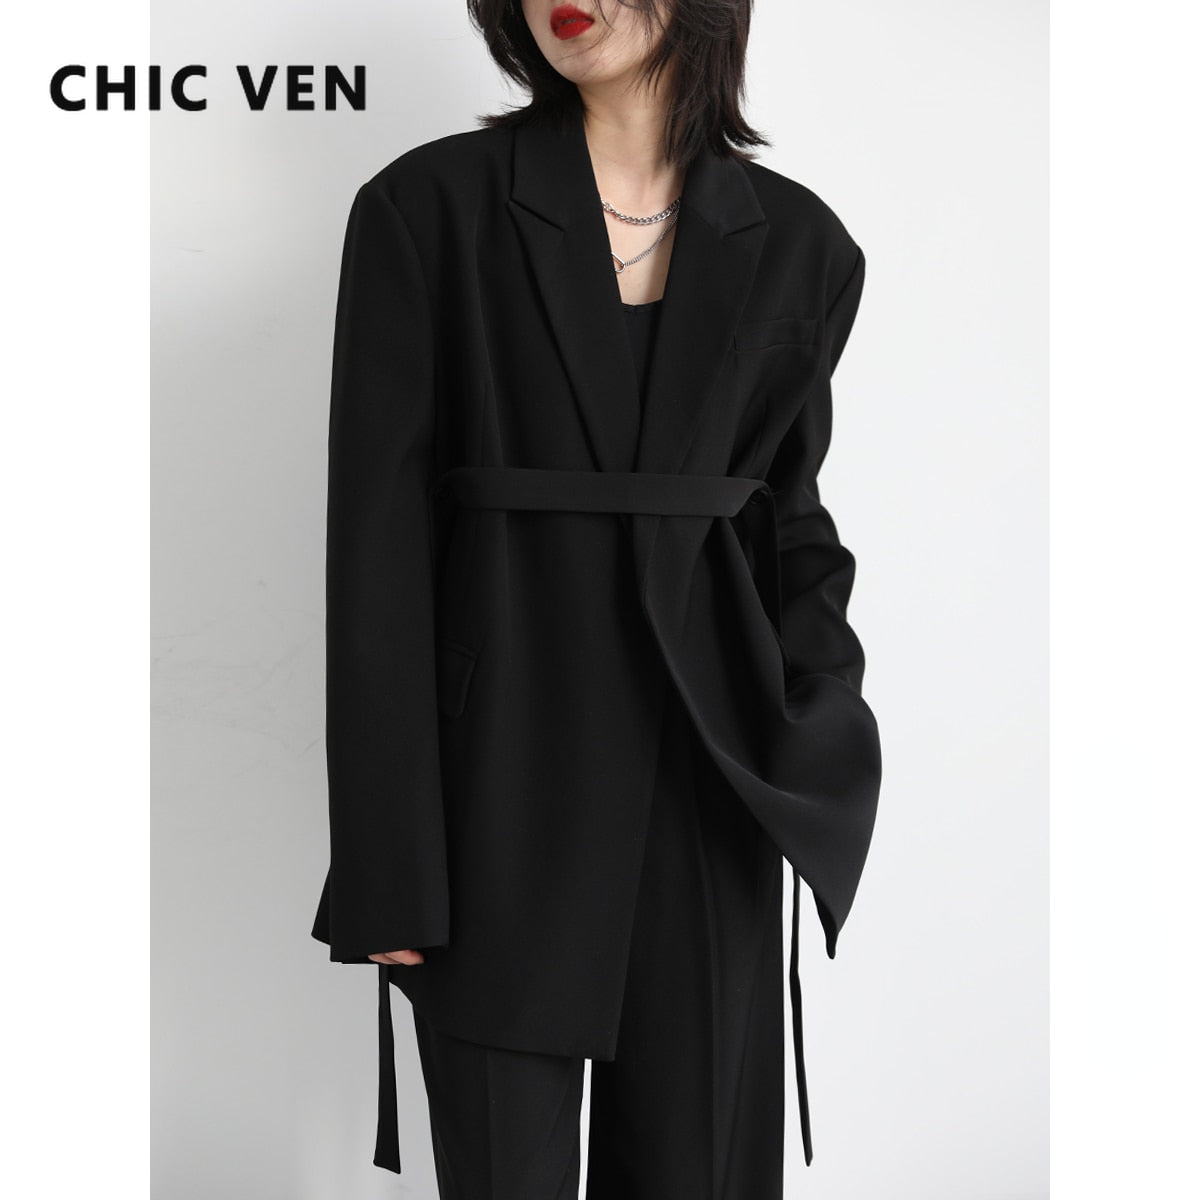 Clacive  Women Blazer Black Ribbon Women's Medium Long Coat Loose Female Pant Suits Office Lady Business Tops Spring Autumn